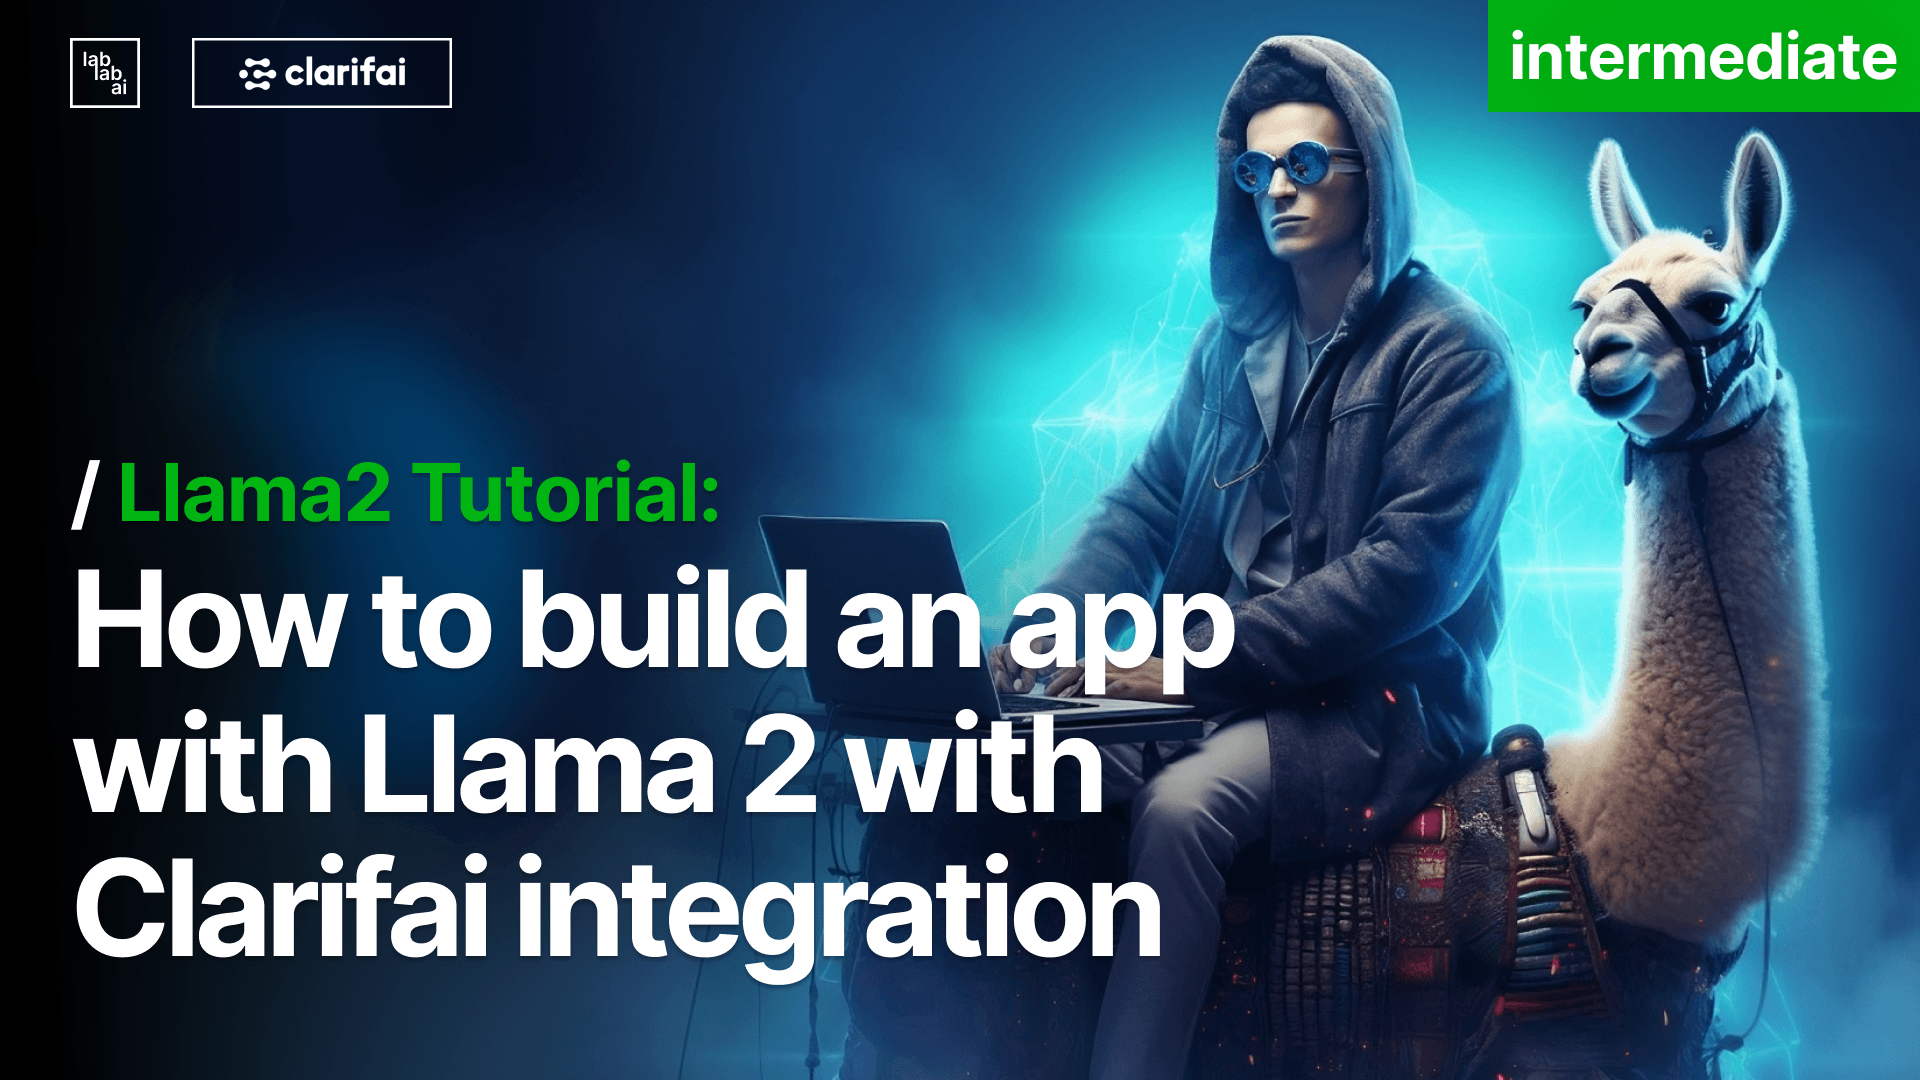 Llama 2 Tutorial: How to build an app with Llama 2 with Clarifai integration